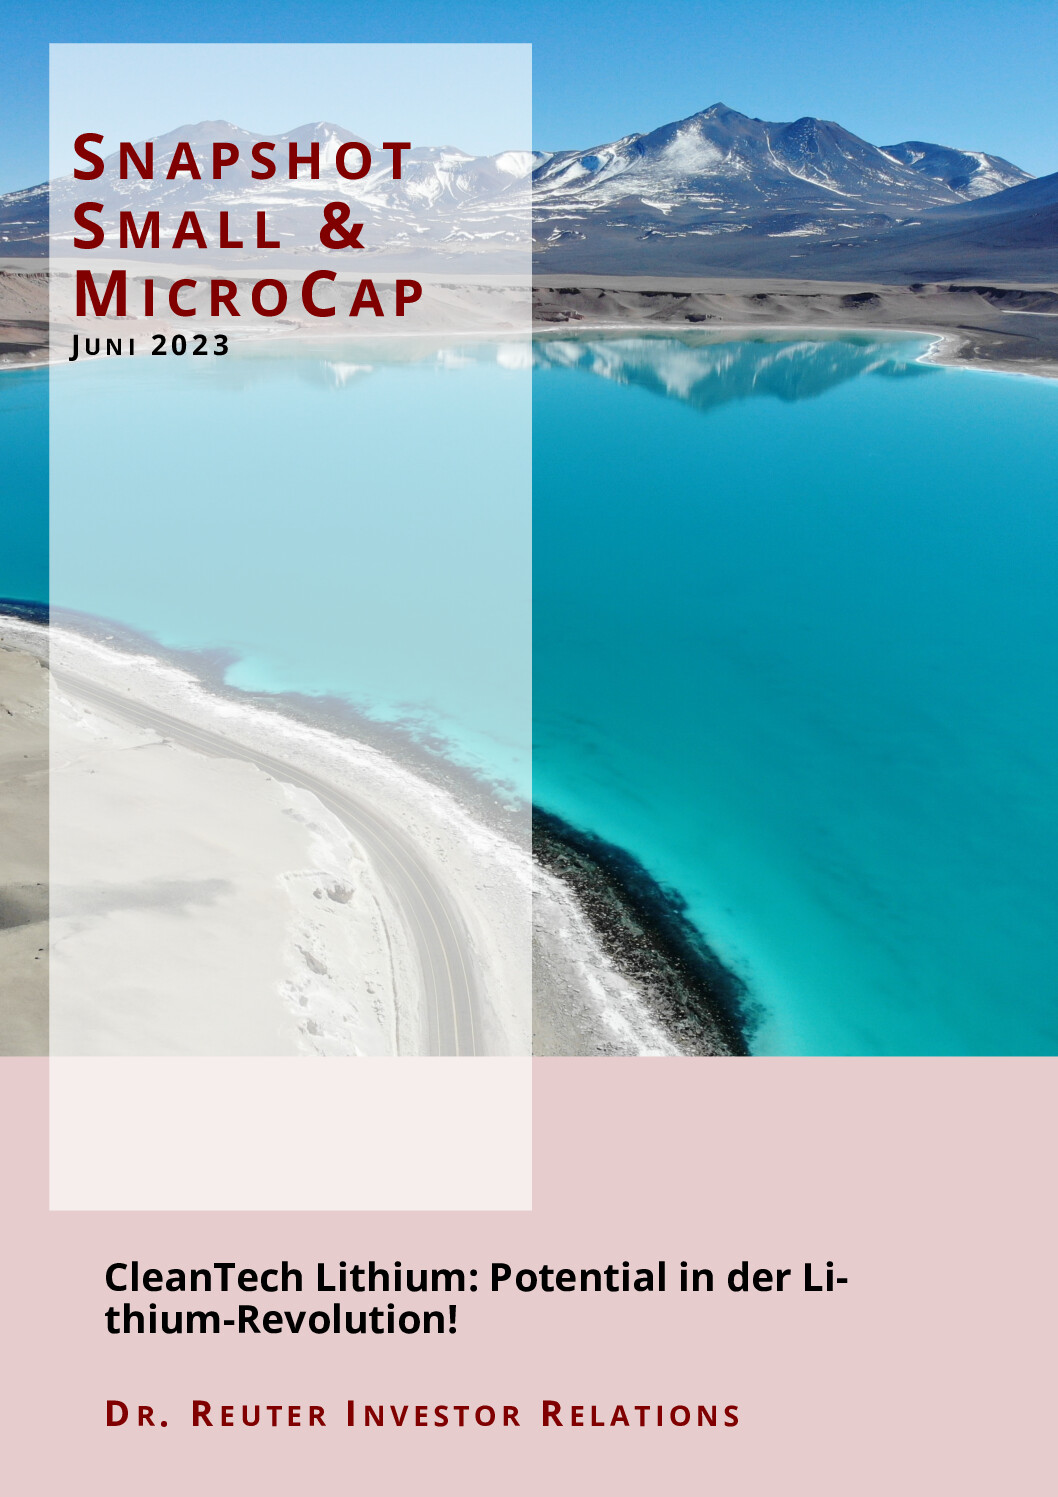 30.06.2023 CleanTech Lithium: Potential in der Lithium-Revolution!